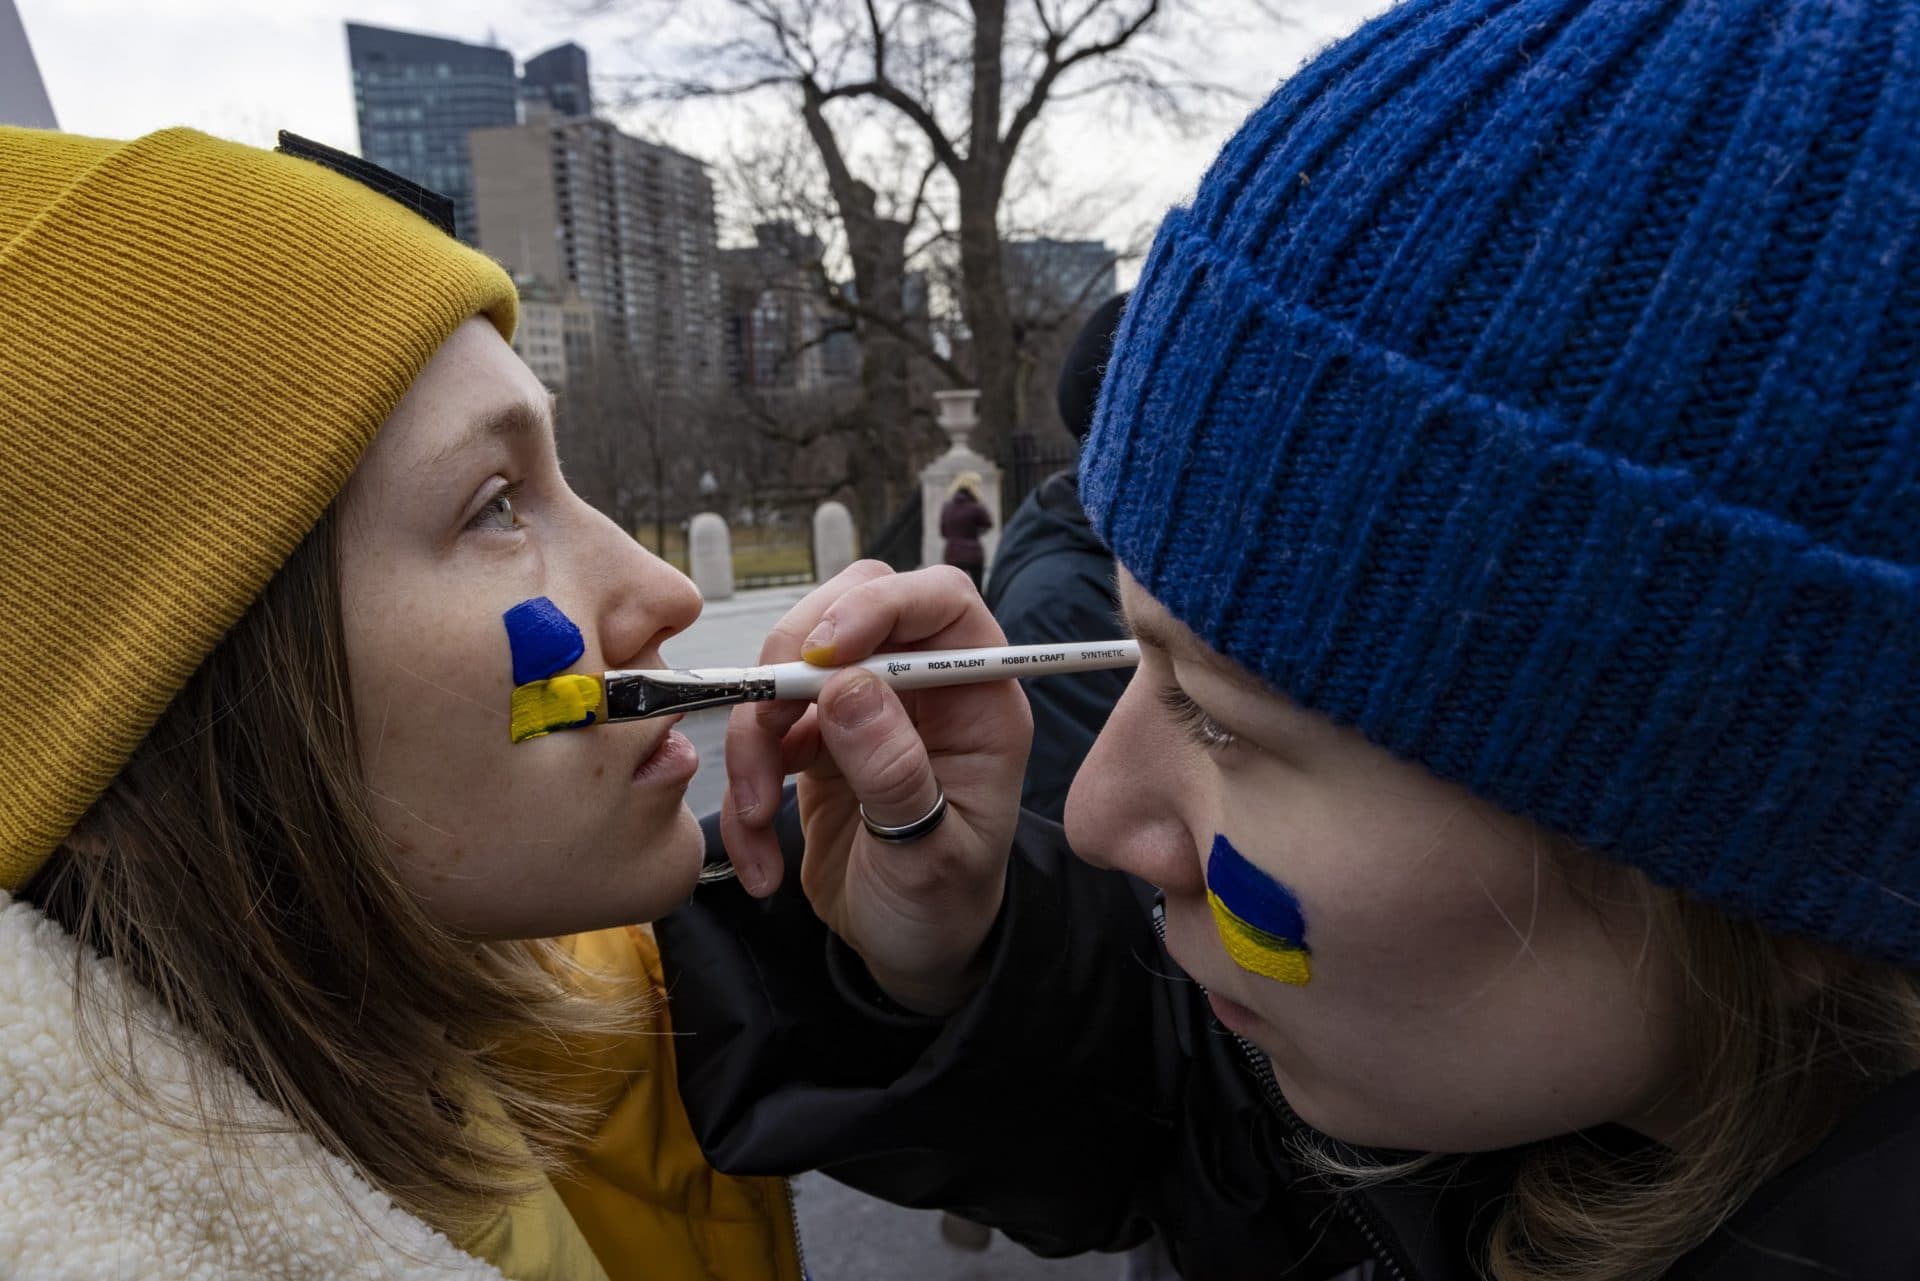 Anna Muranova paints the Ukrainian flag on the face of Tetiana Litus during the State House rally. (WBUR)